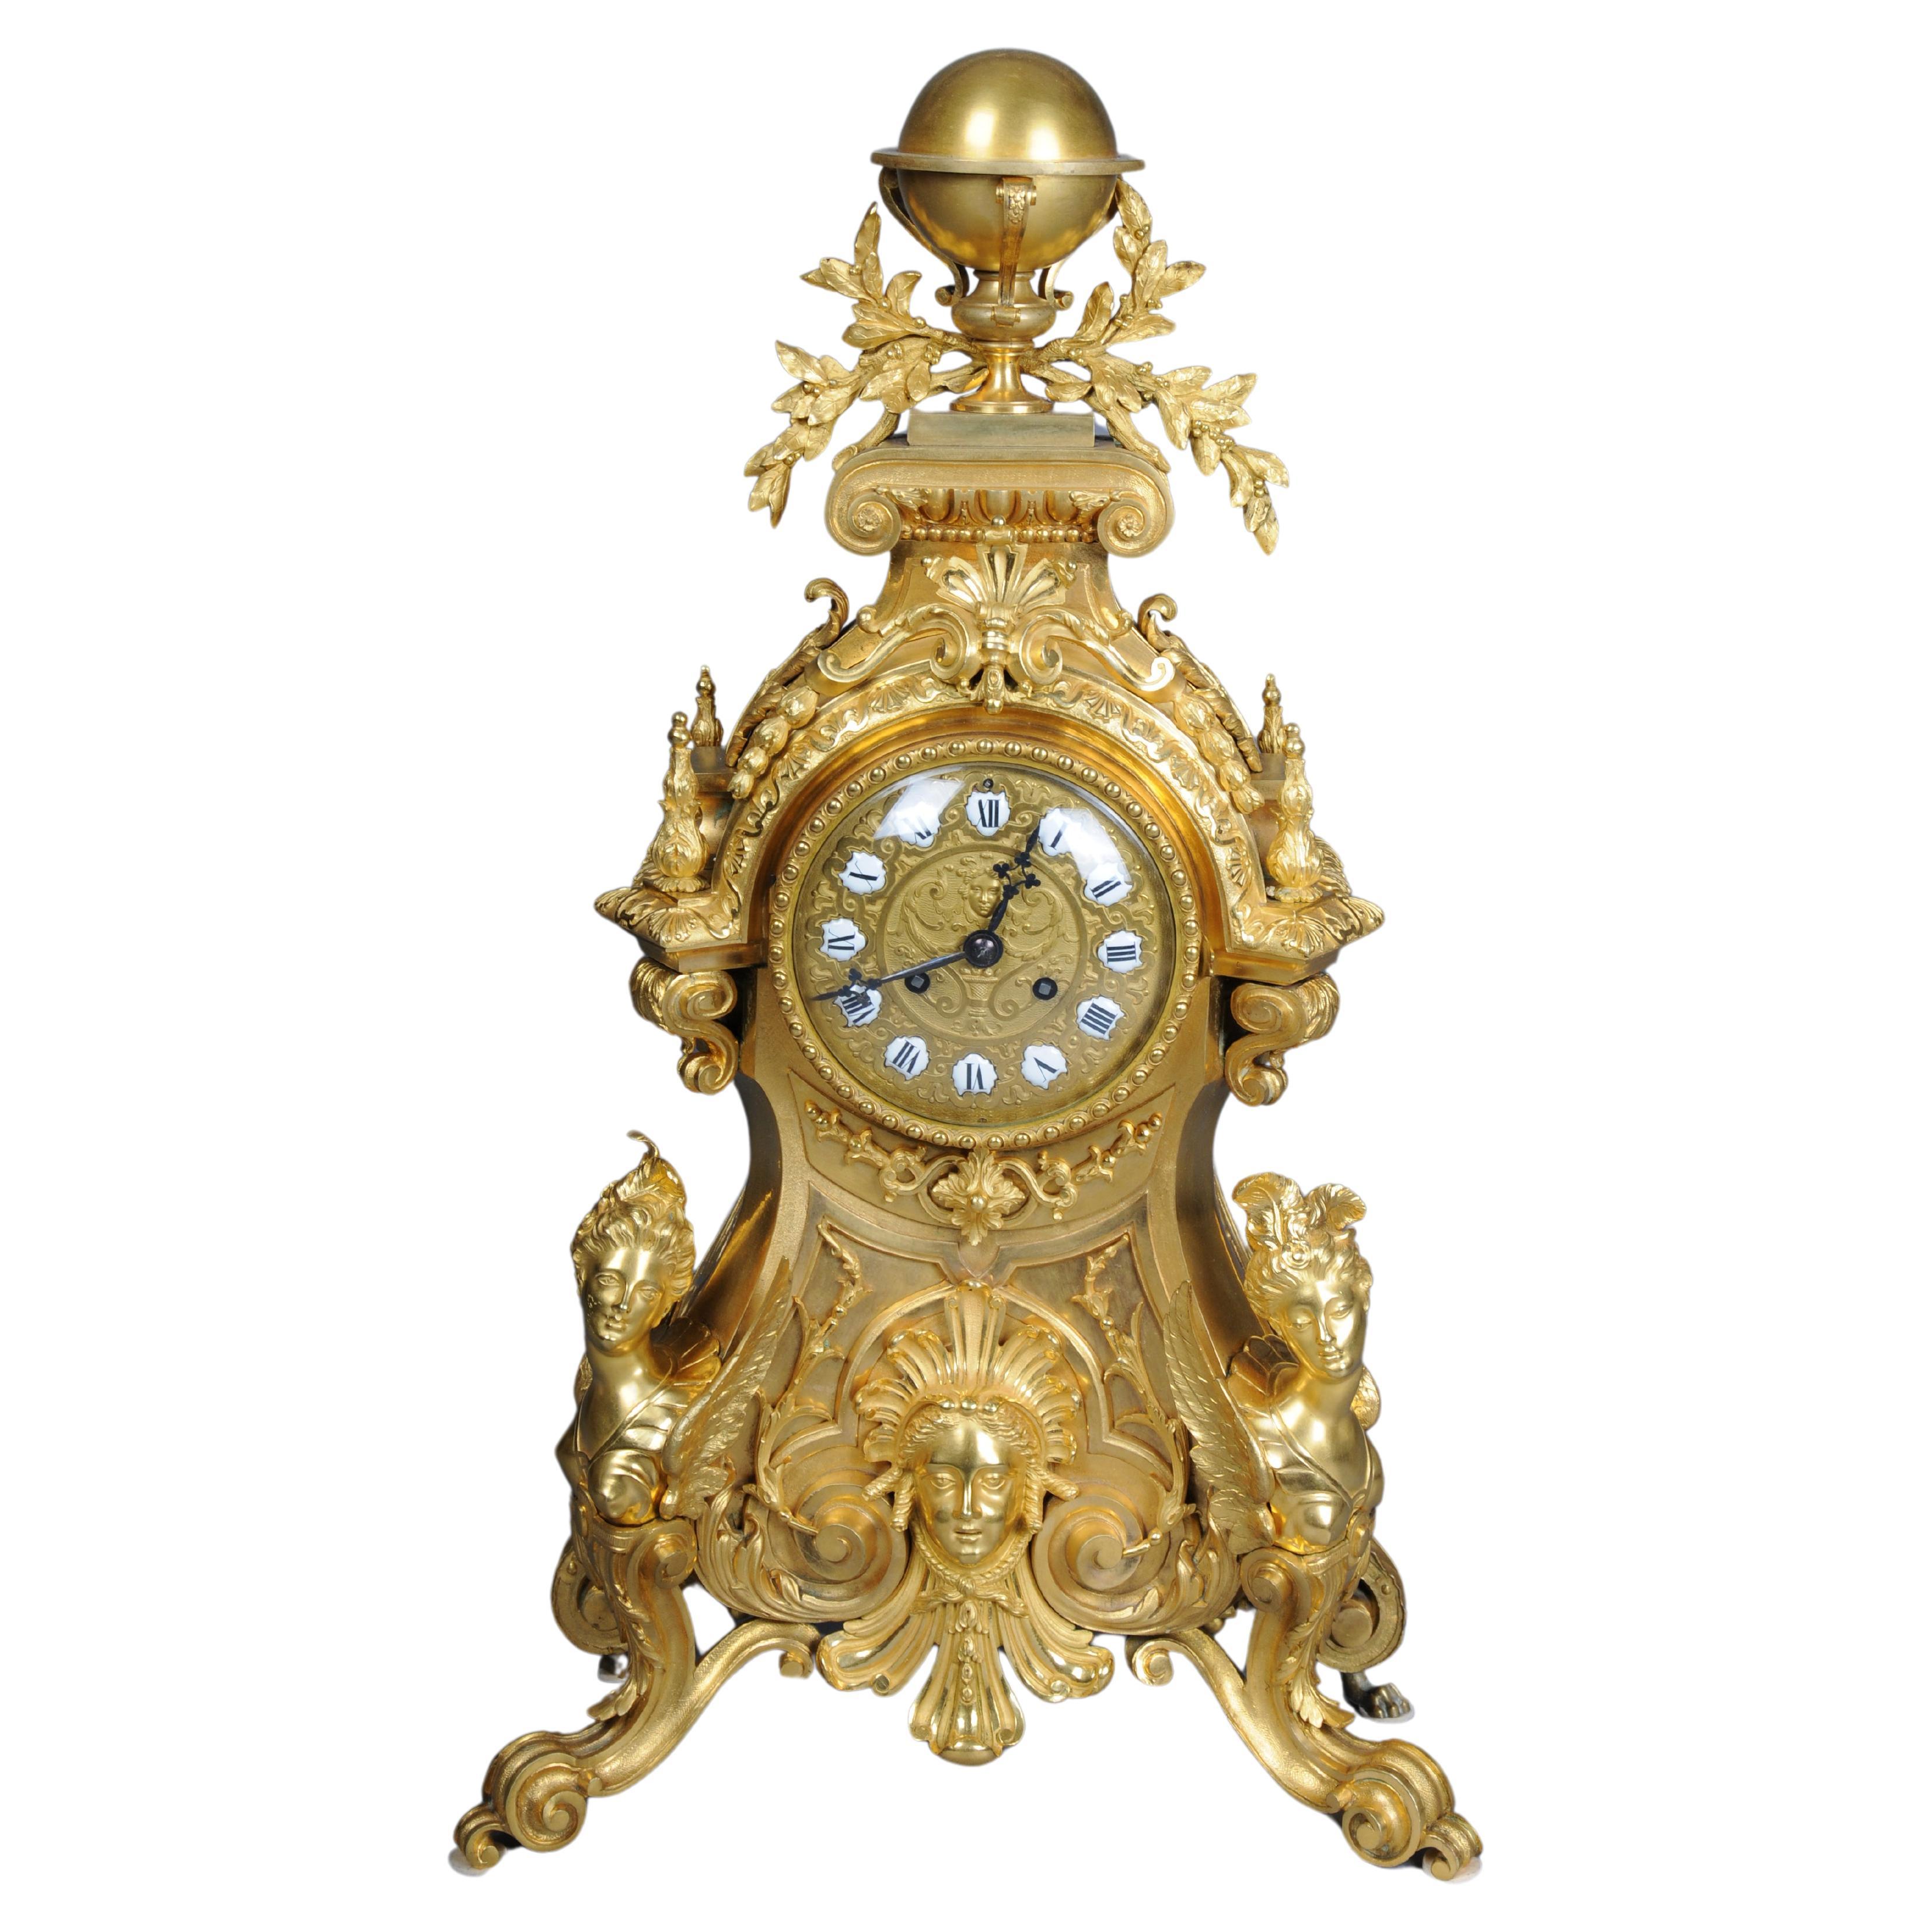 Royal fire-gilded mantel clock/Pendule Napoleon III, 1870, Paris, signed Lantier